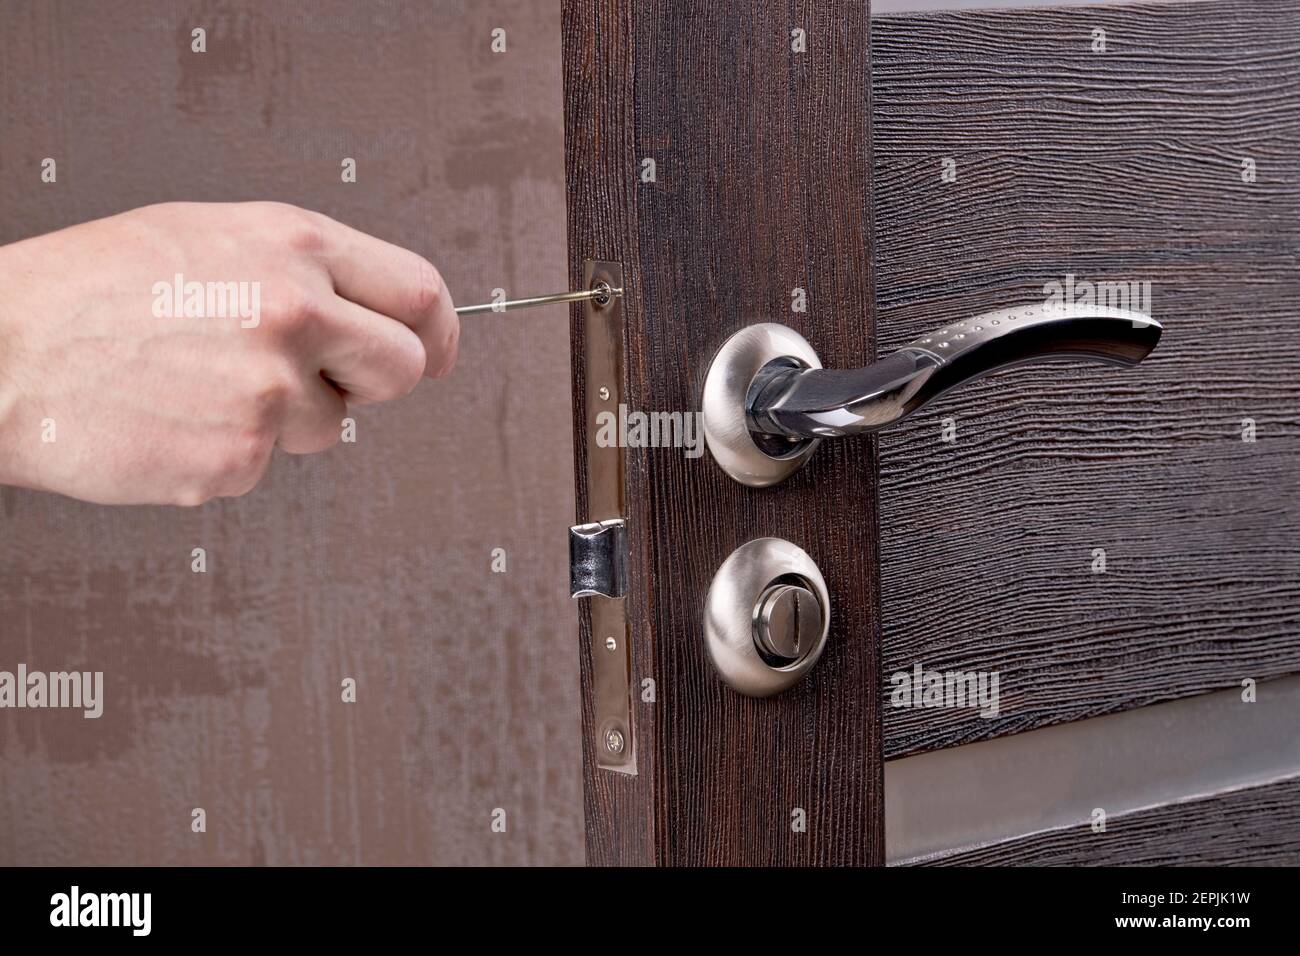 person fixing door furniture using screwdriver. improvement process Stock Photo